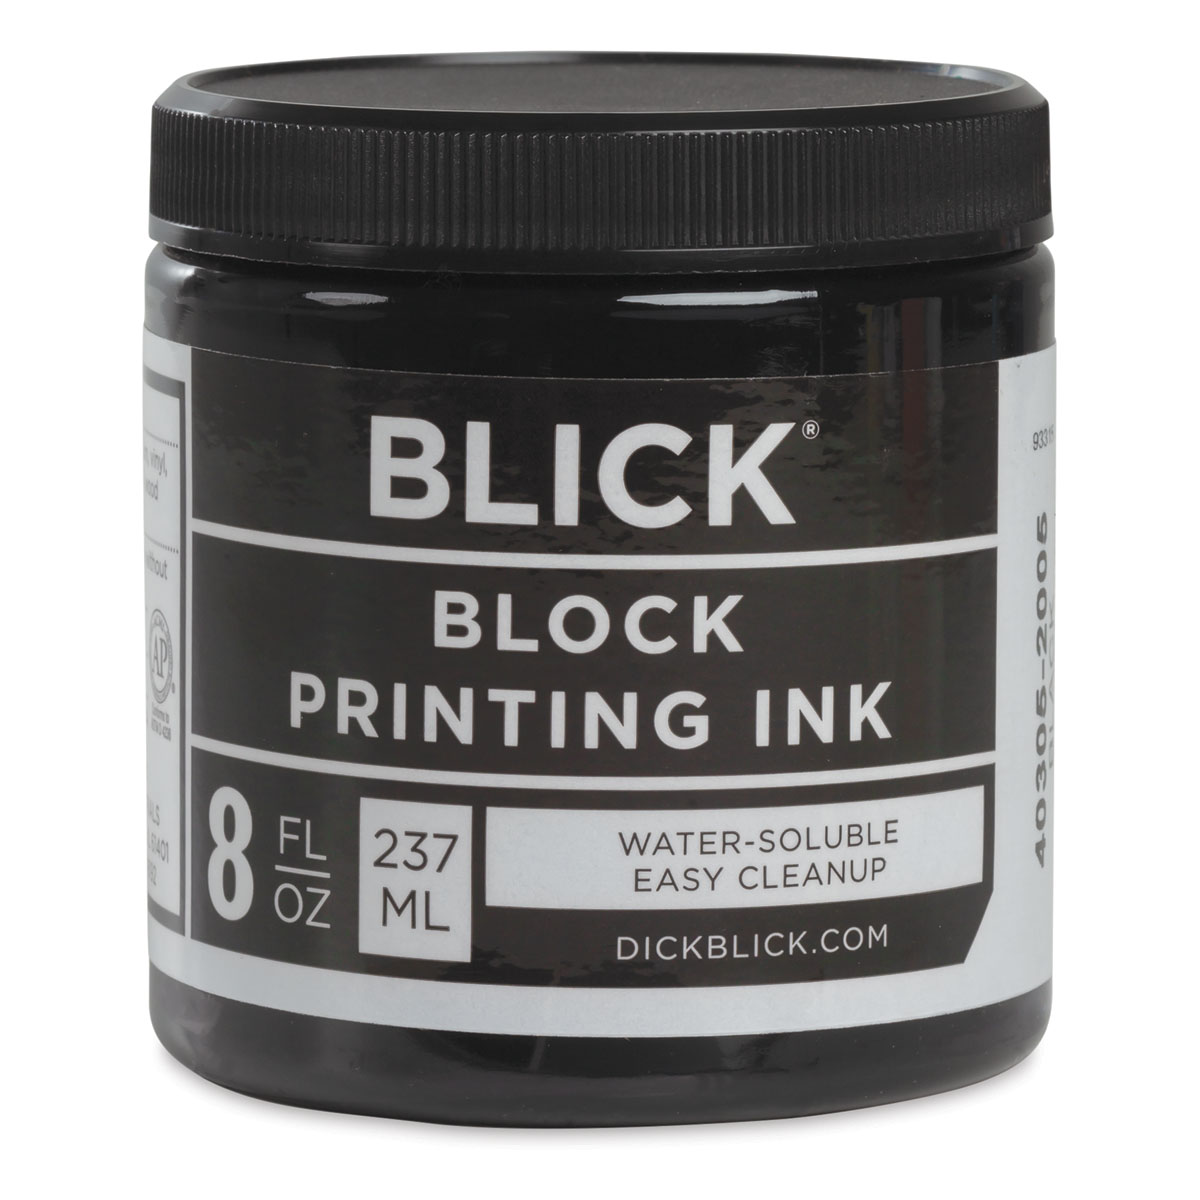 Blick Black Cat Waterproof India Ink - 1 1/4 oz